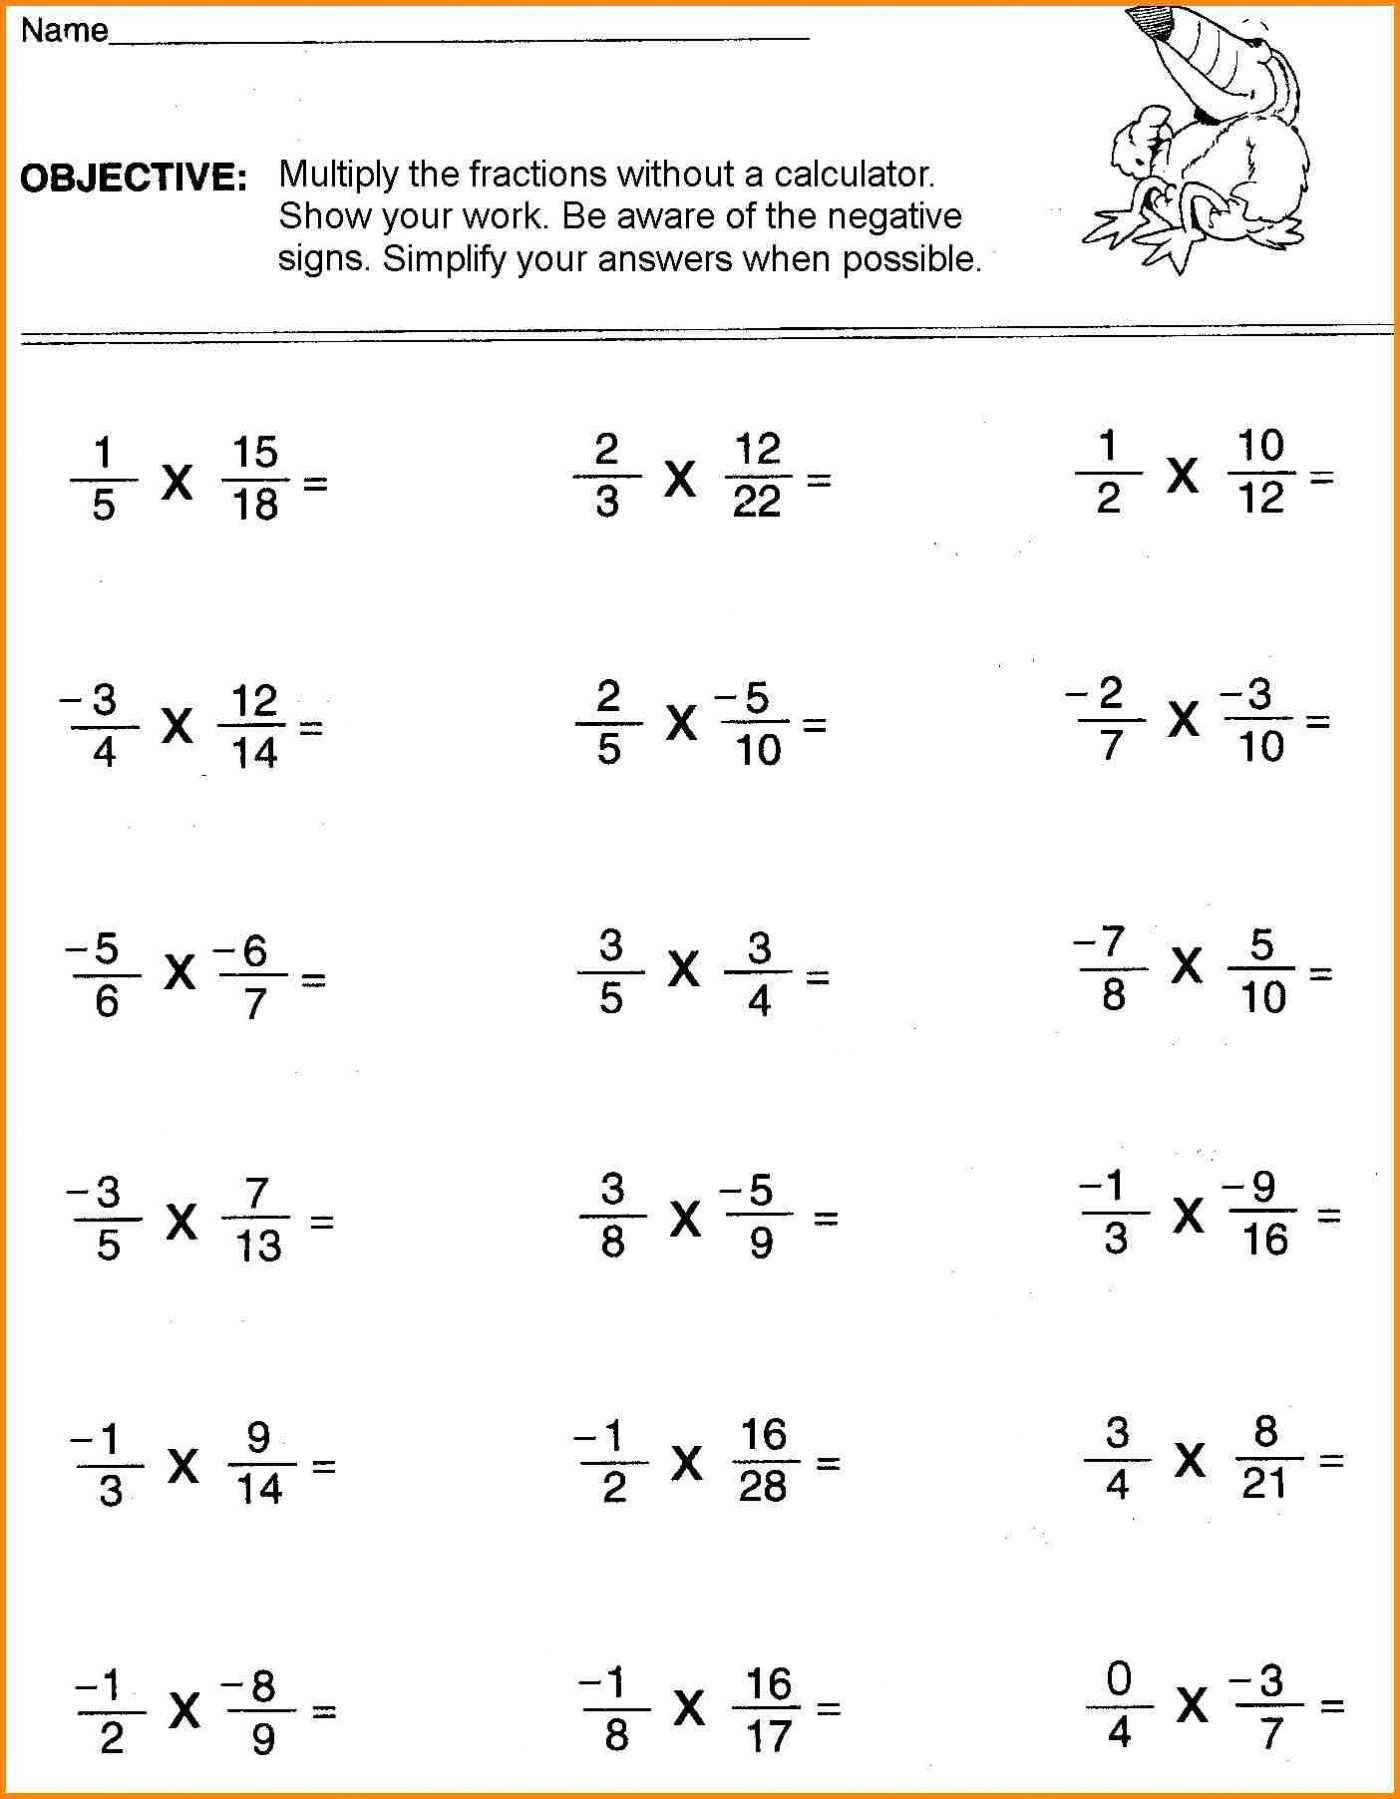 Multiplying Decimals Worksheets 6th Grade together with Math Worksheets Dads Multiplication Sheets Addition Printable for